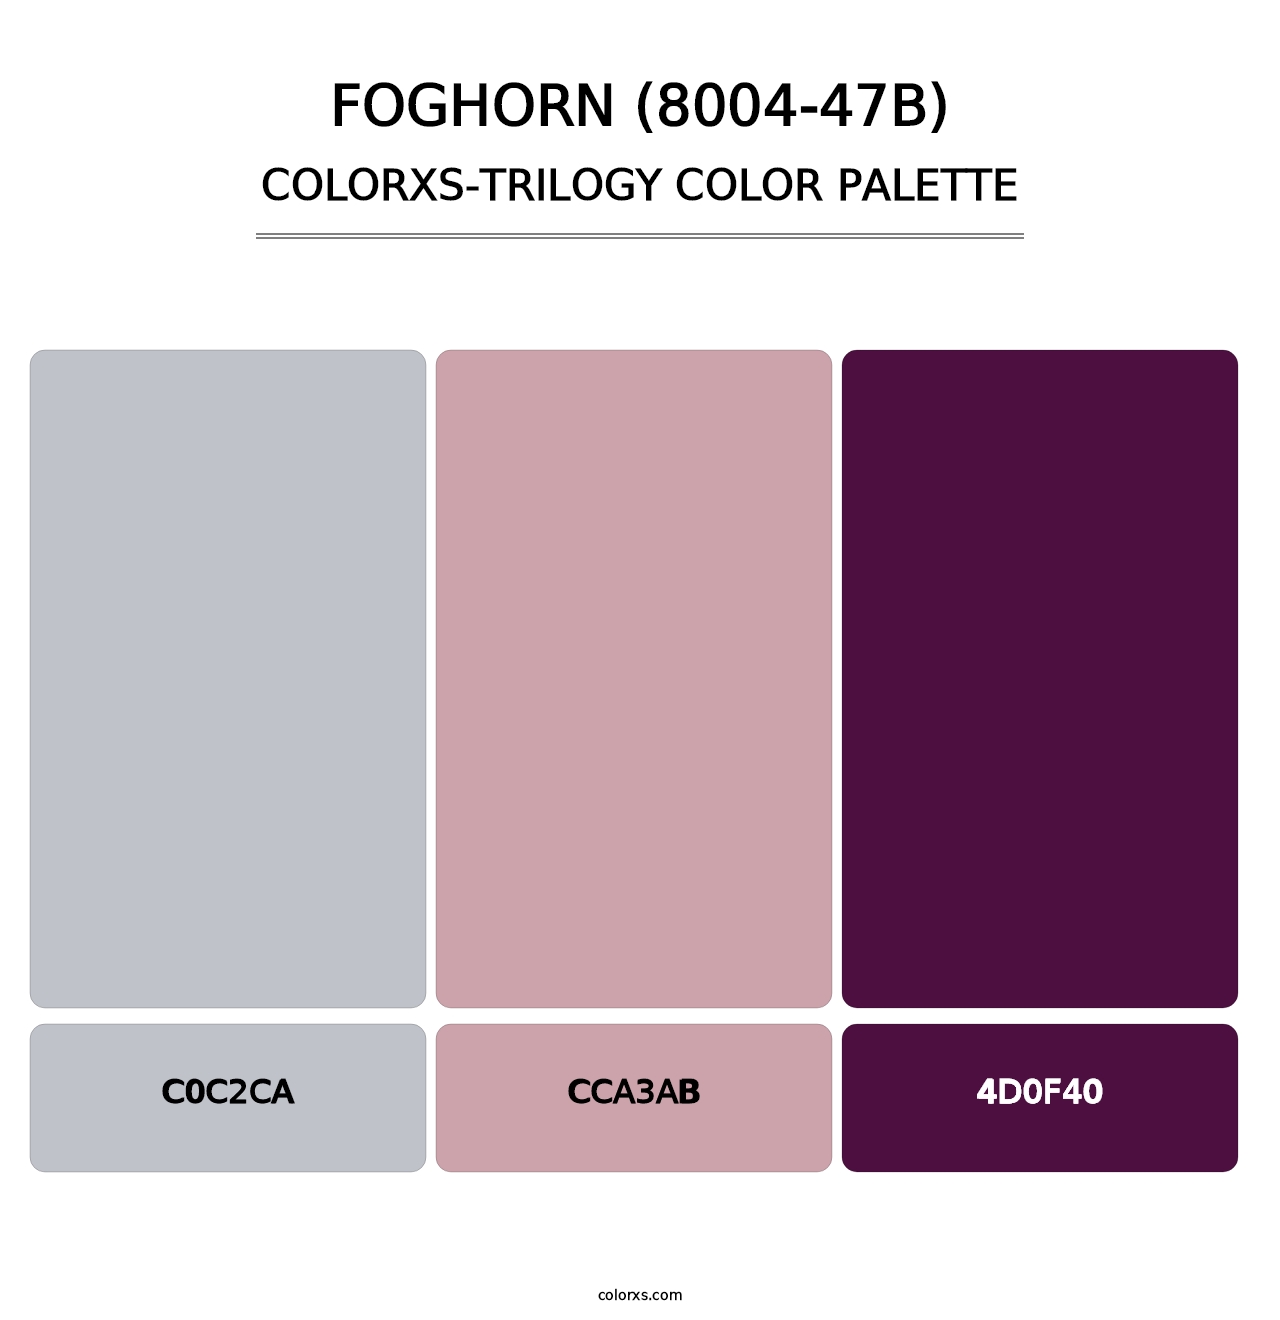 Foghorn (8004-47B) - Colorxs Trilogy Palette